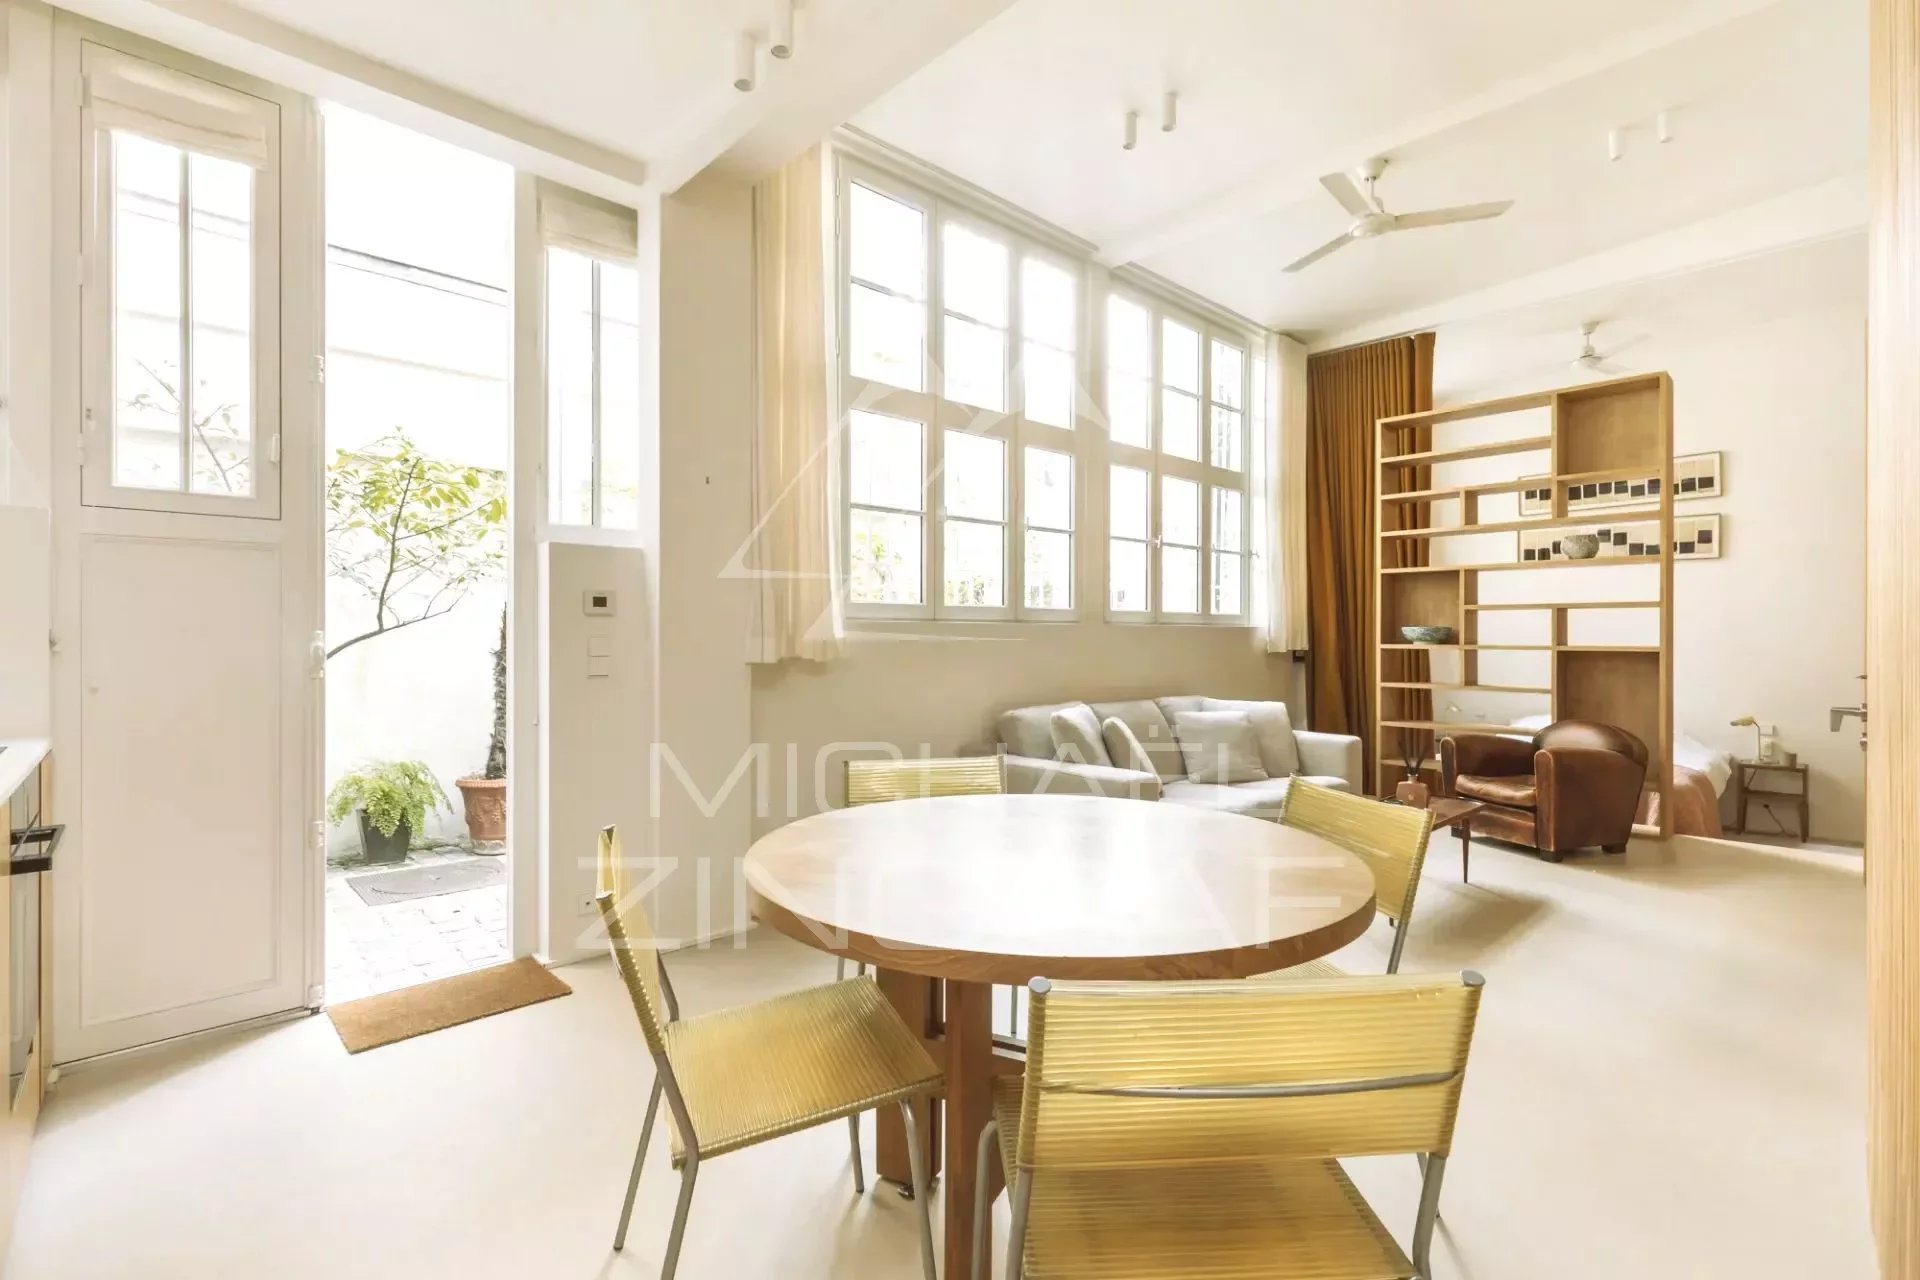 Exclusivity - For sale - Home-like flat - Artist's studio - Rue de Verneuil